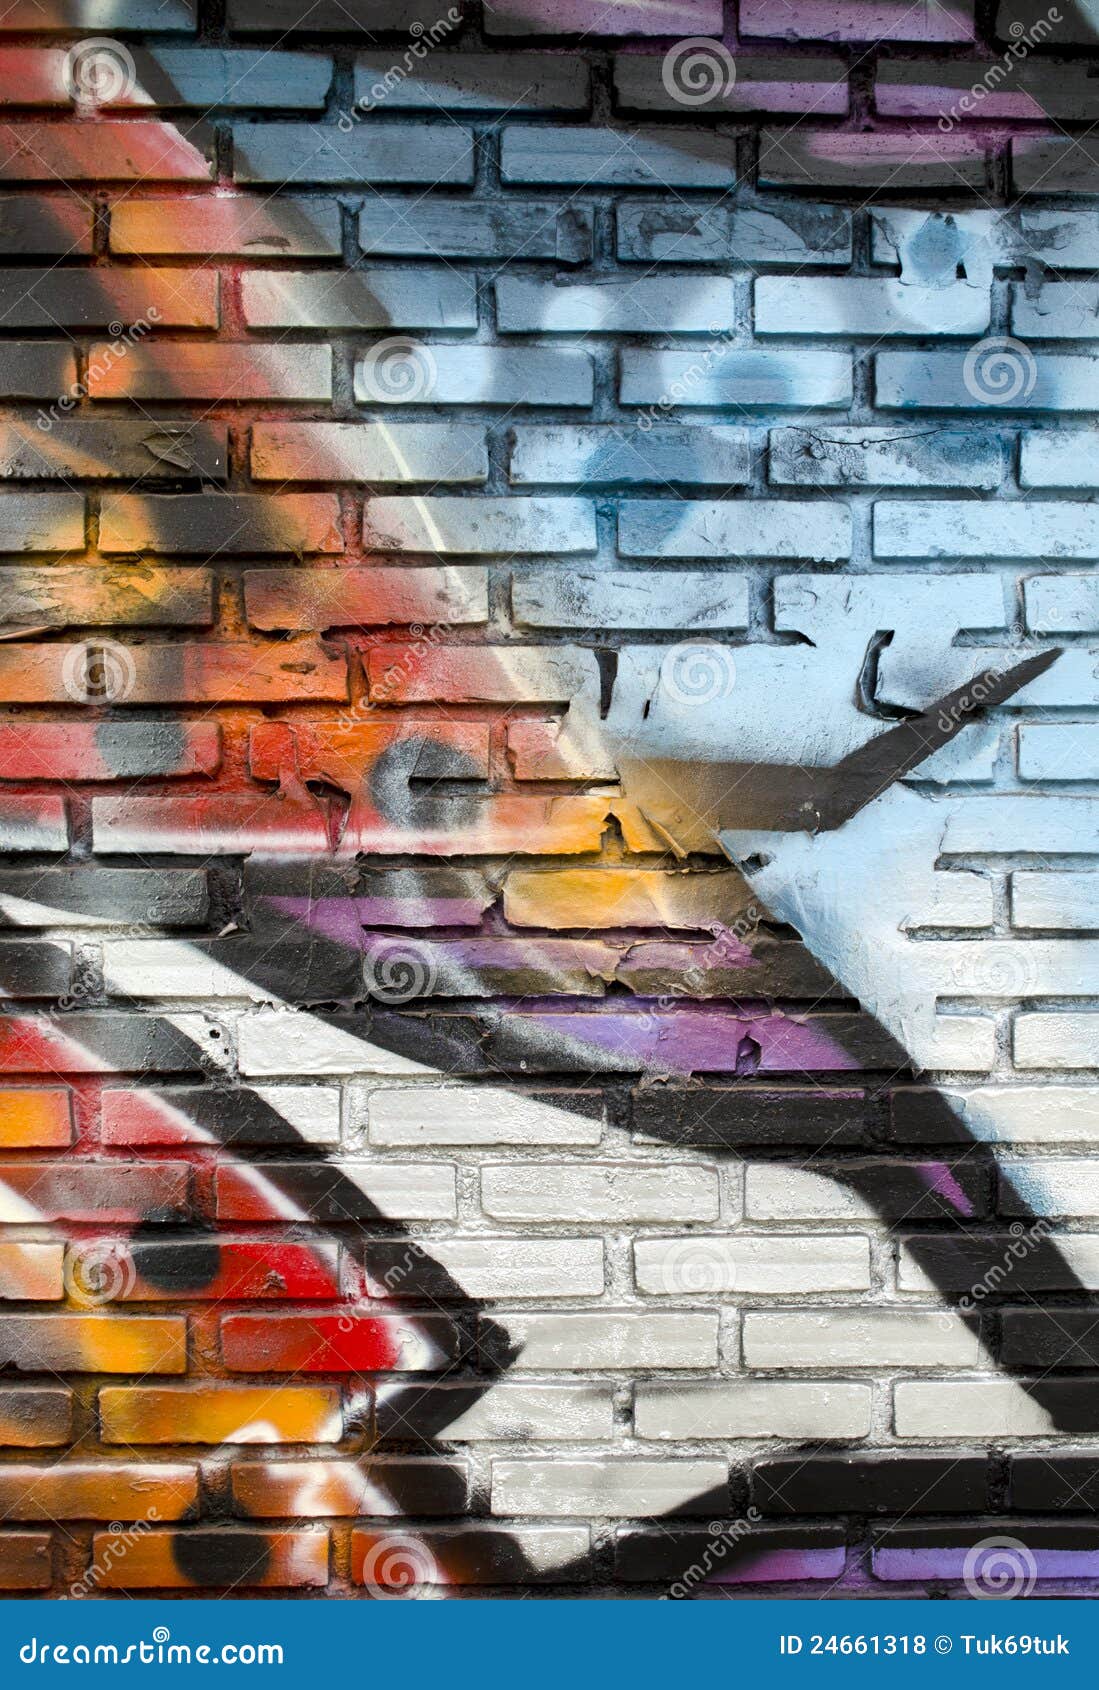 Graffiti Wall Images  Free Download on Freepik